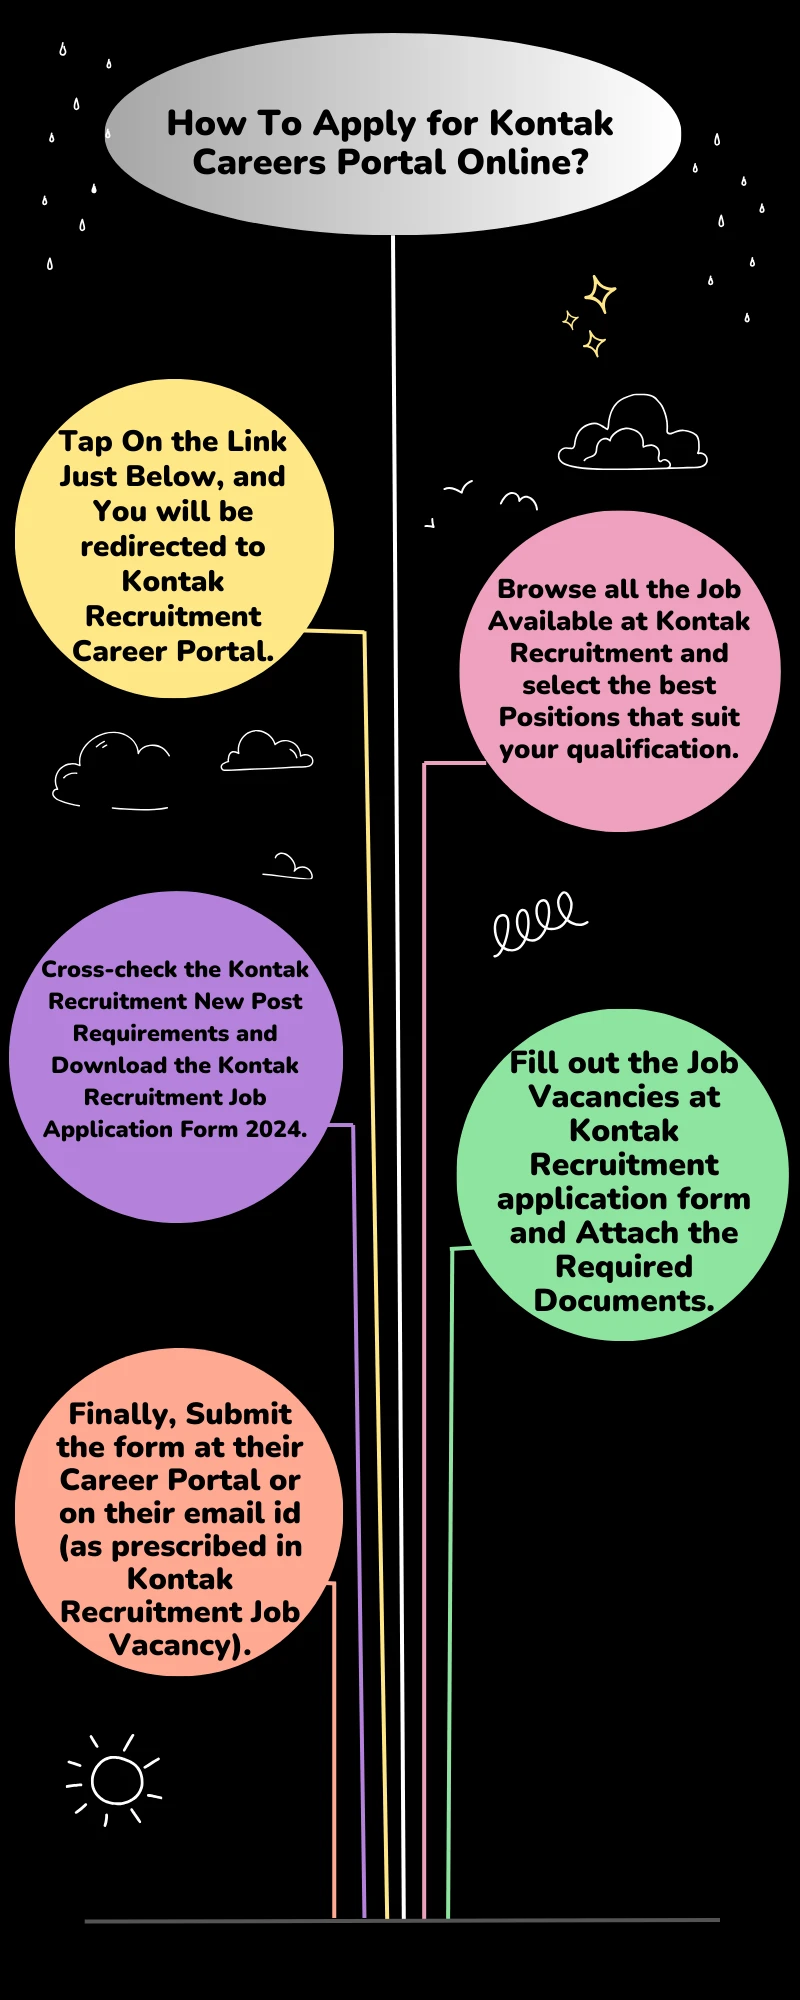 How To Apply for Kontak Careers Portal Online